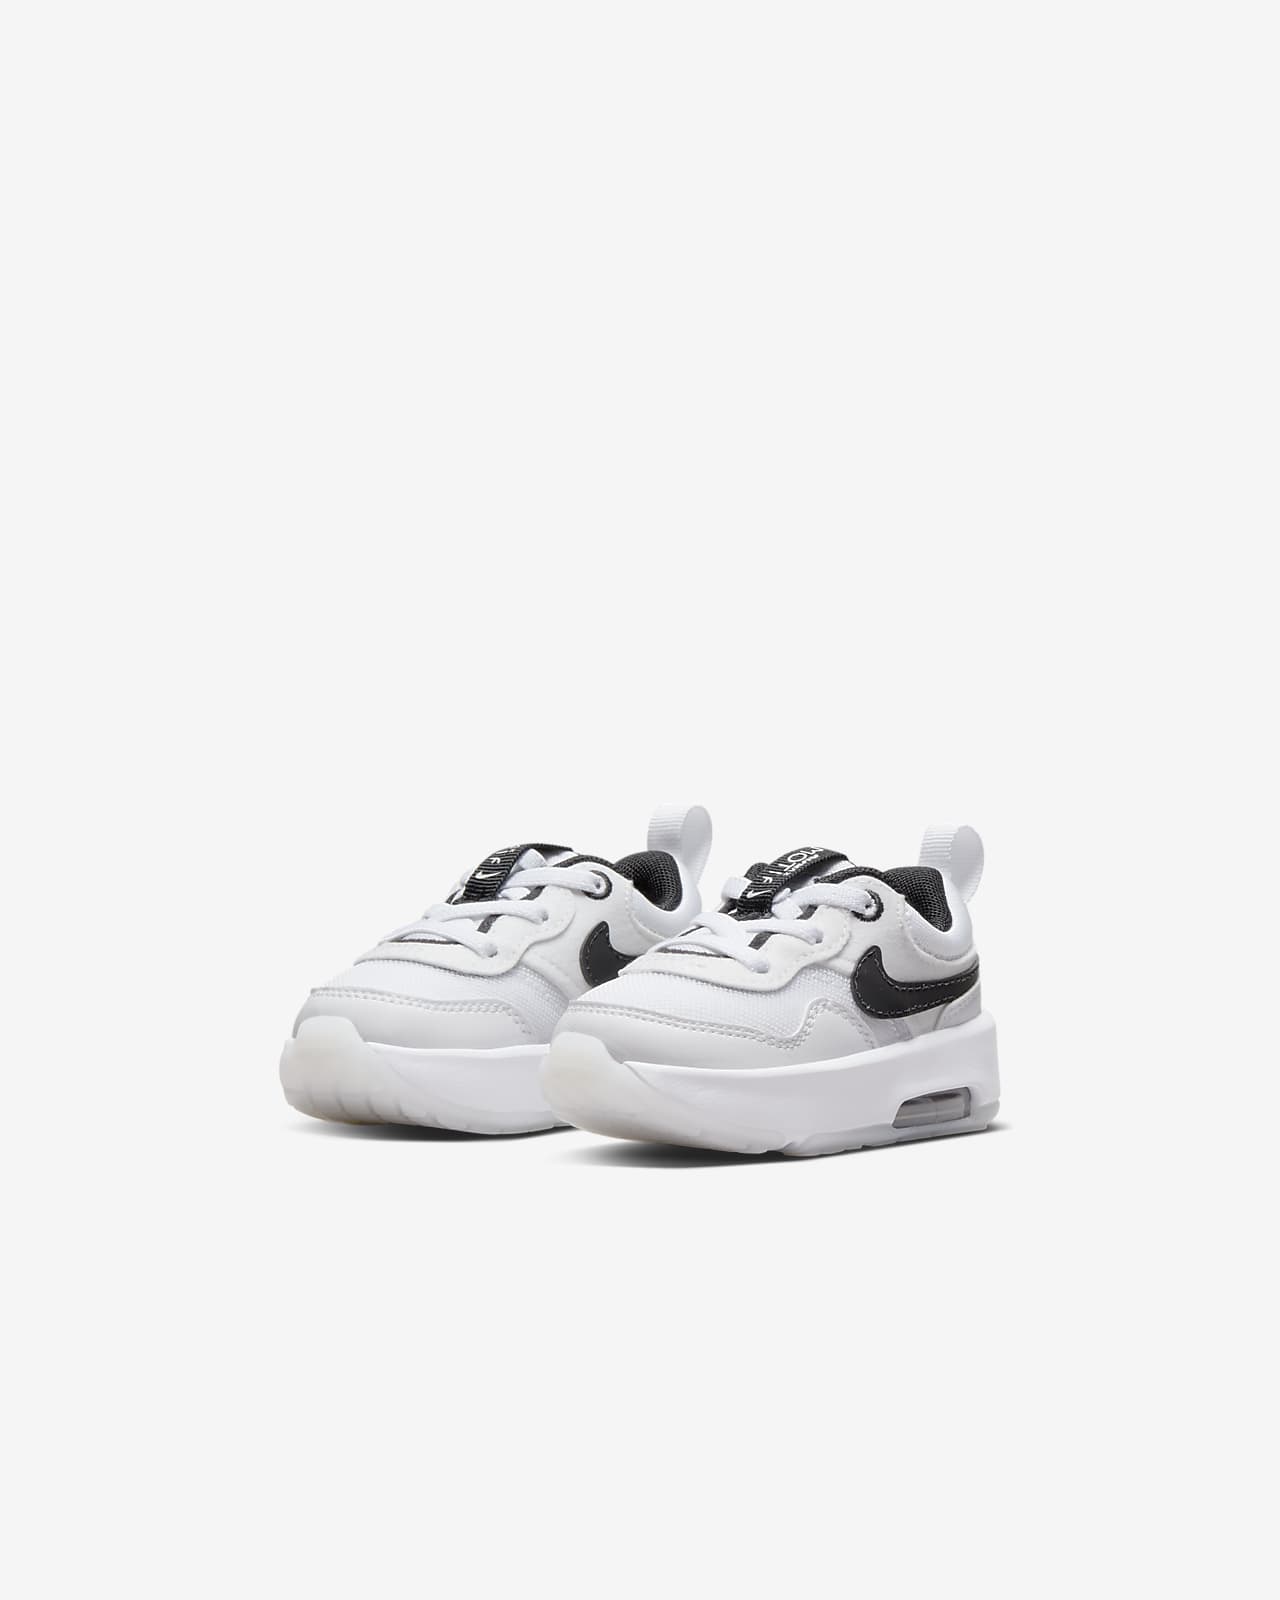 Nike Air Motif Max Baby/Toddler Shoes